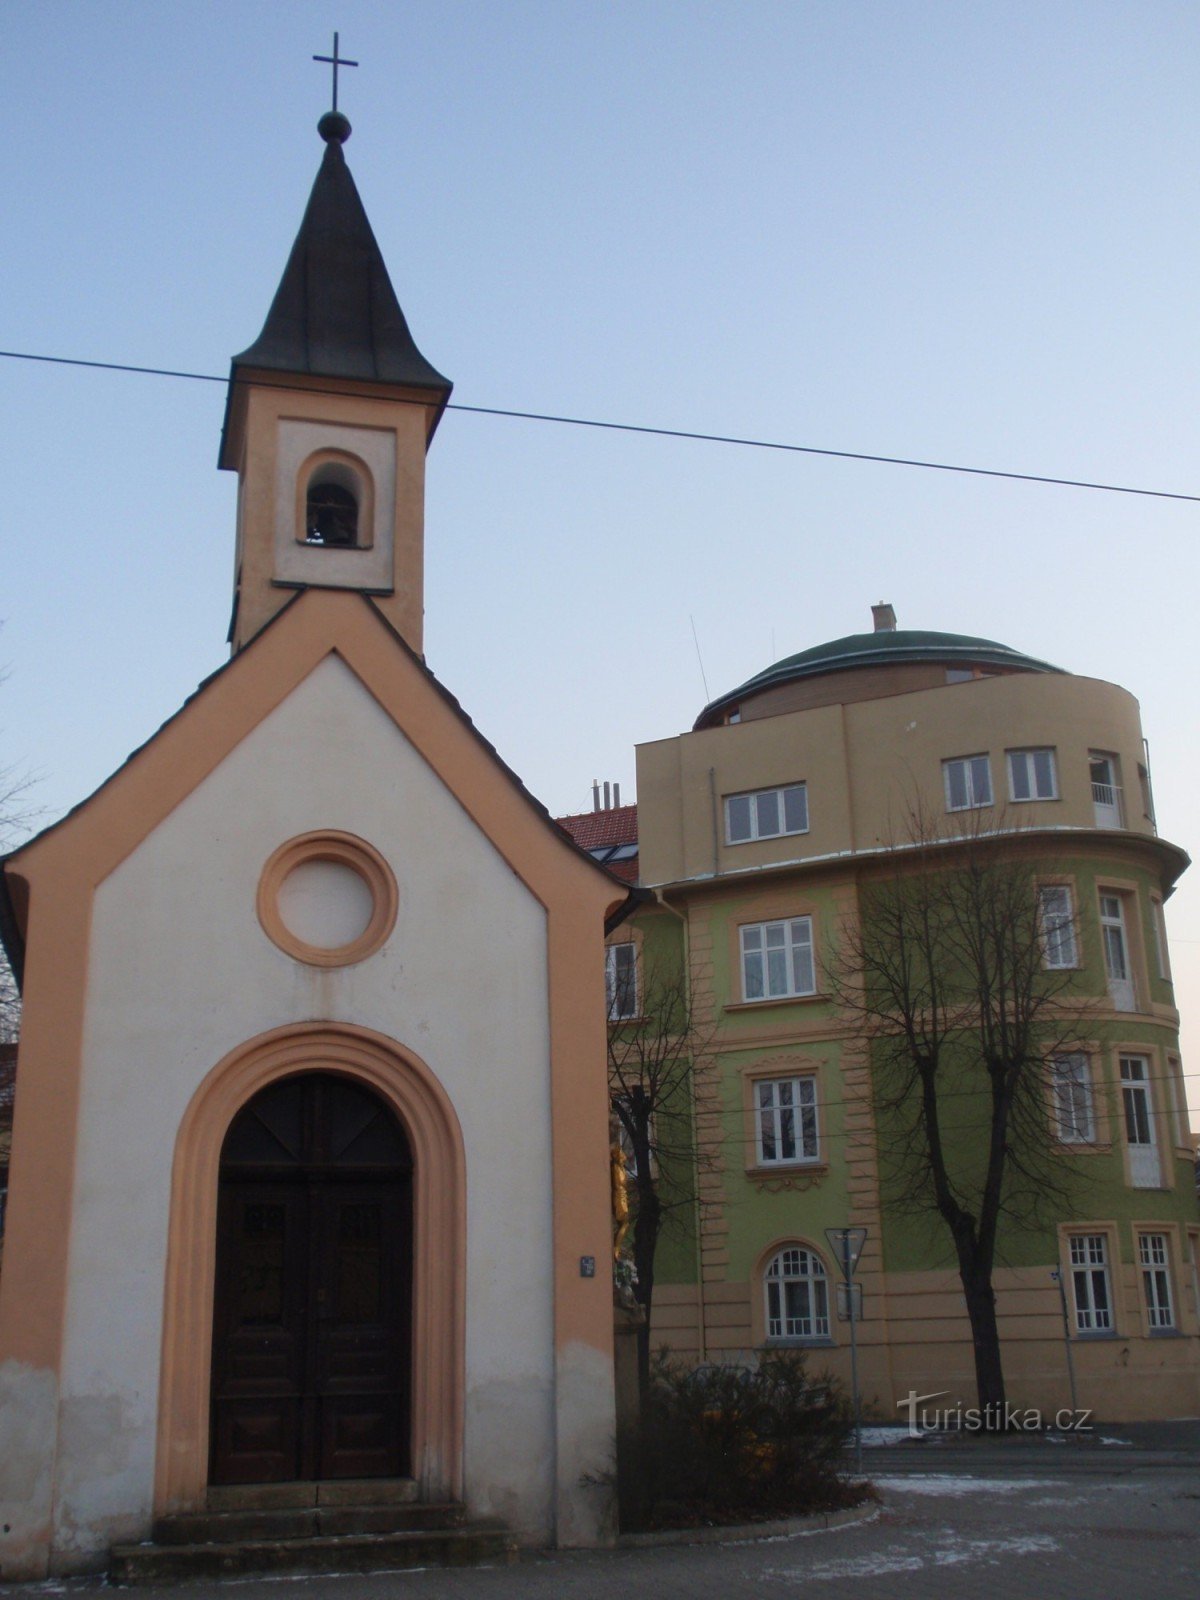 Nhà nguyện St. Františka ở Brno-Židenice